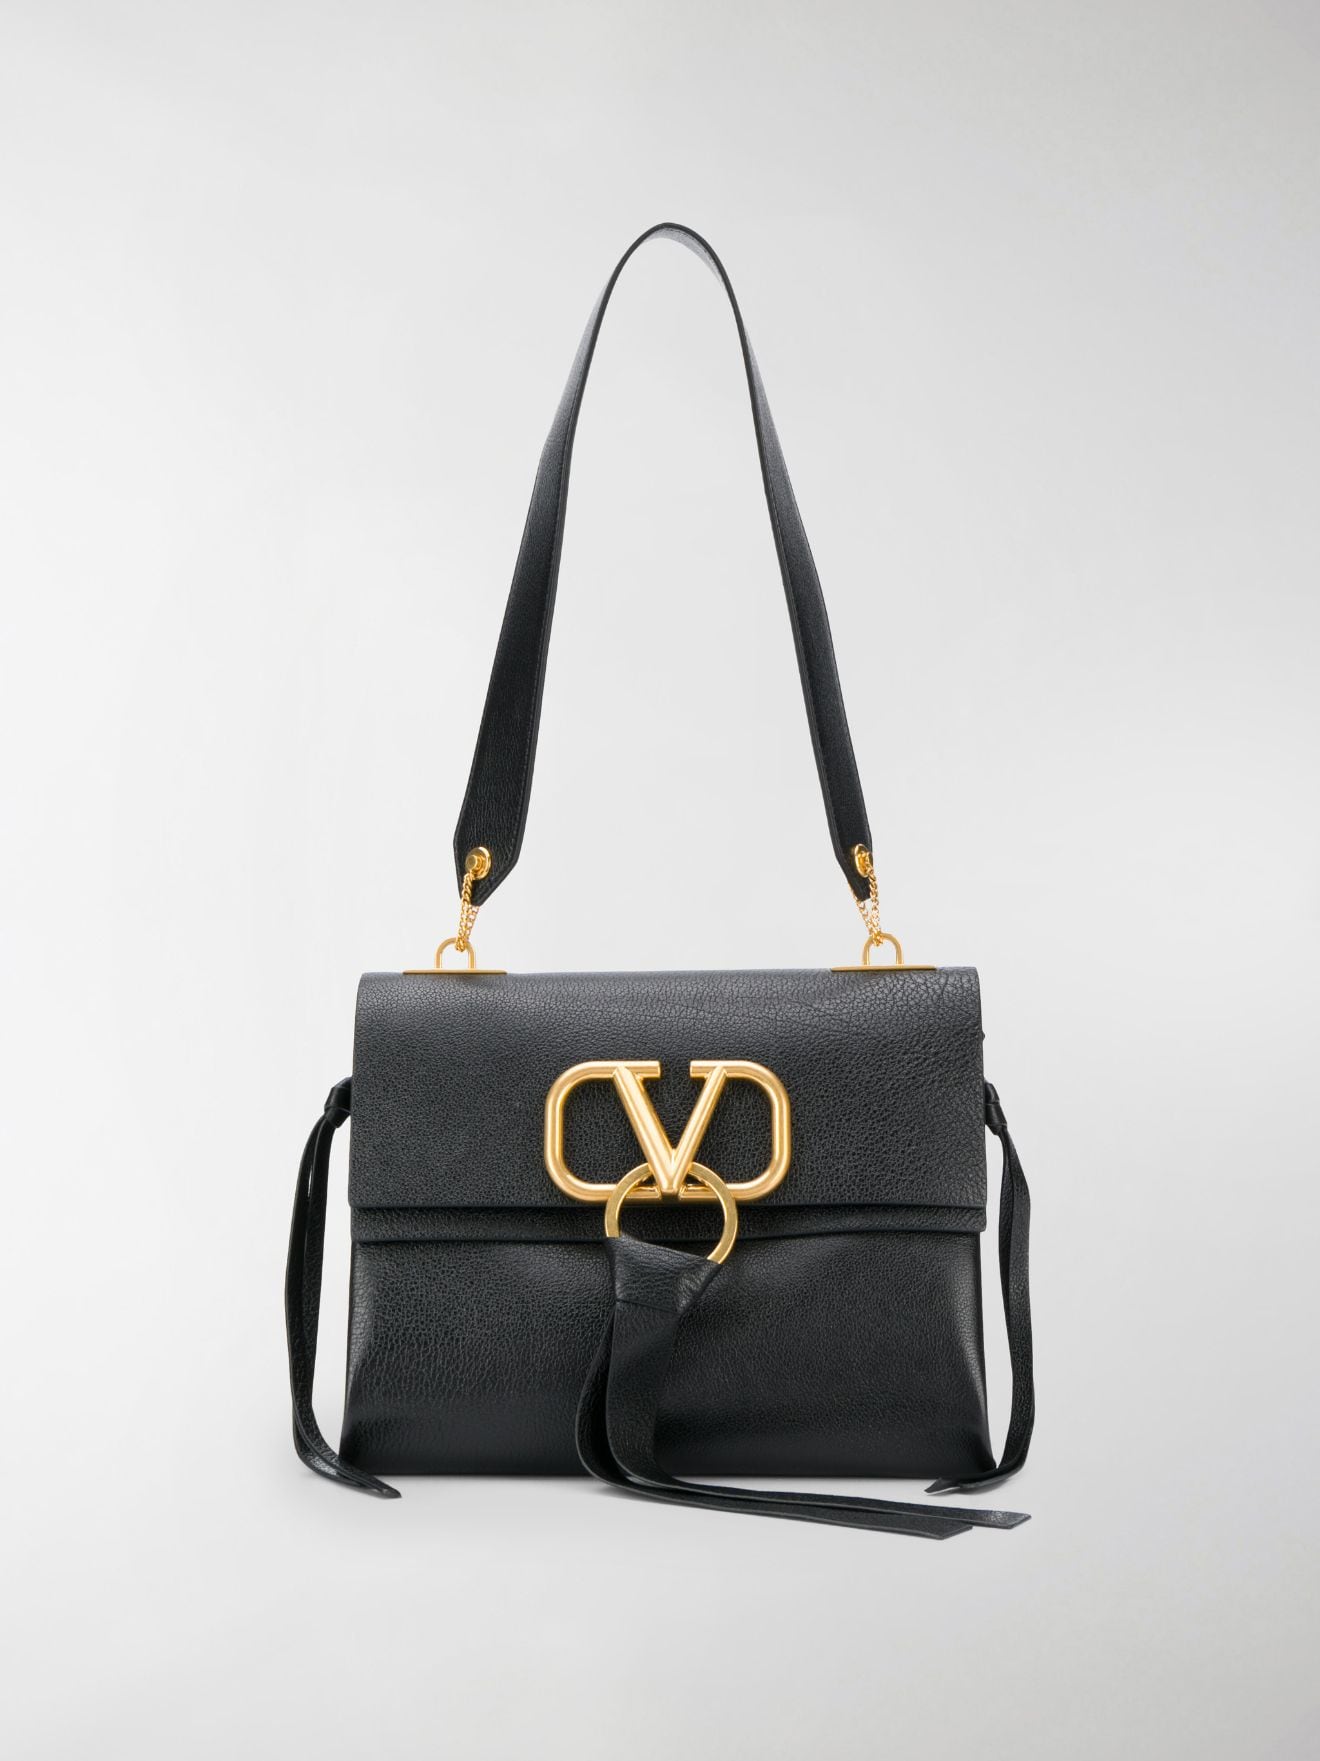 Dian Sastro and The New Valentino Garavani Handbags